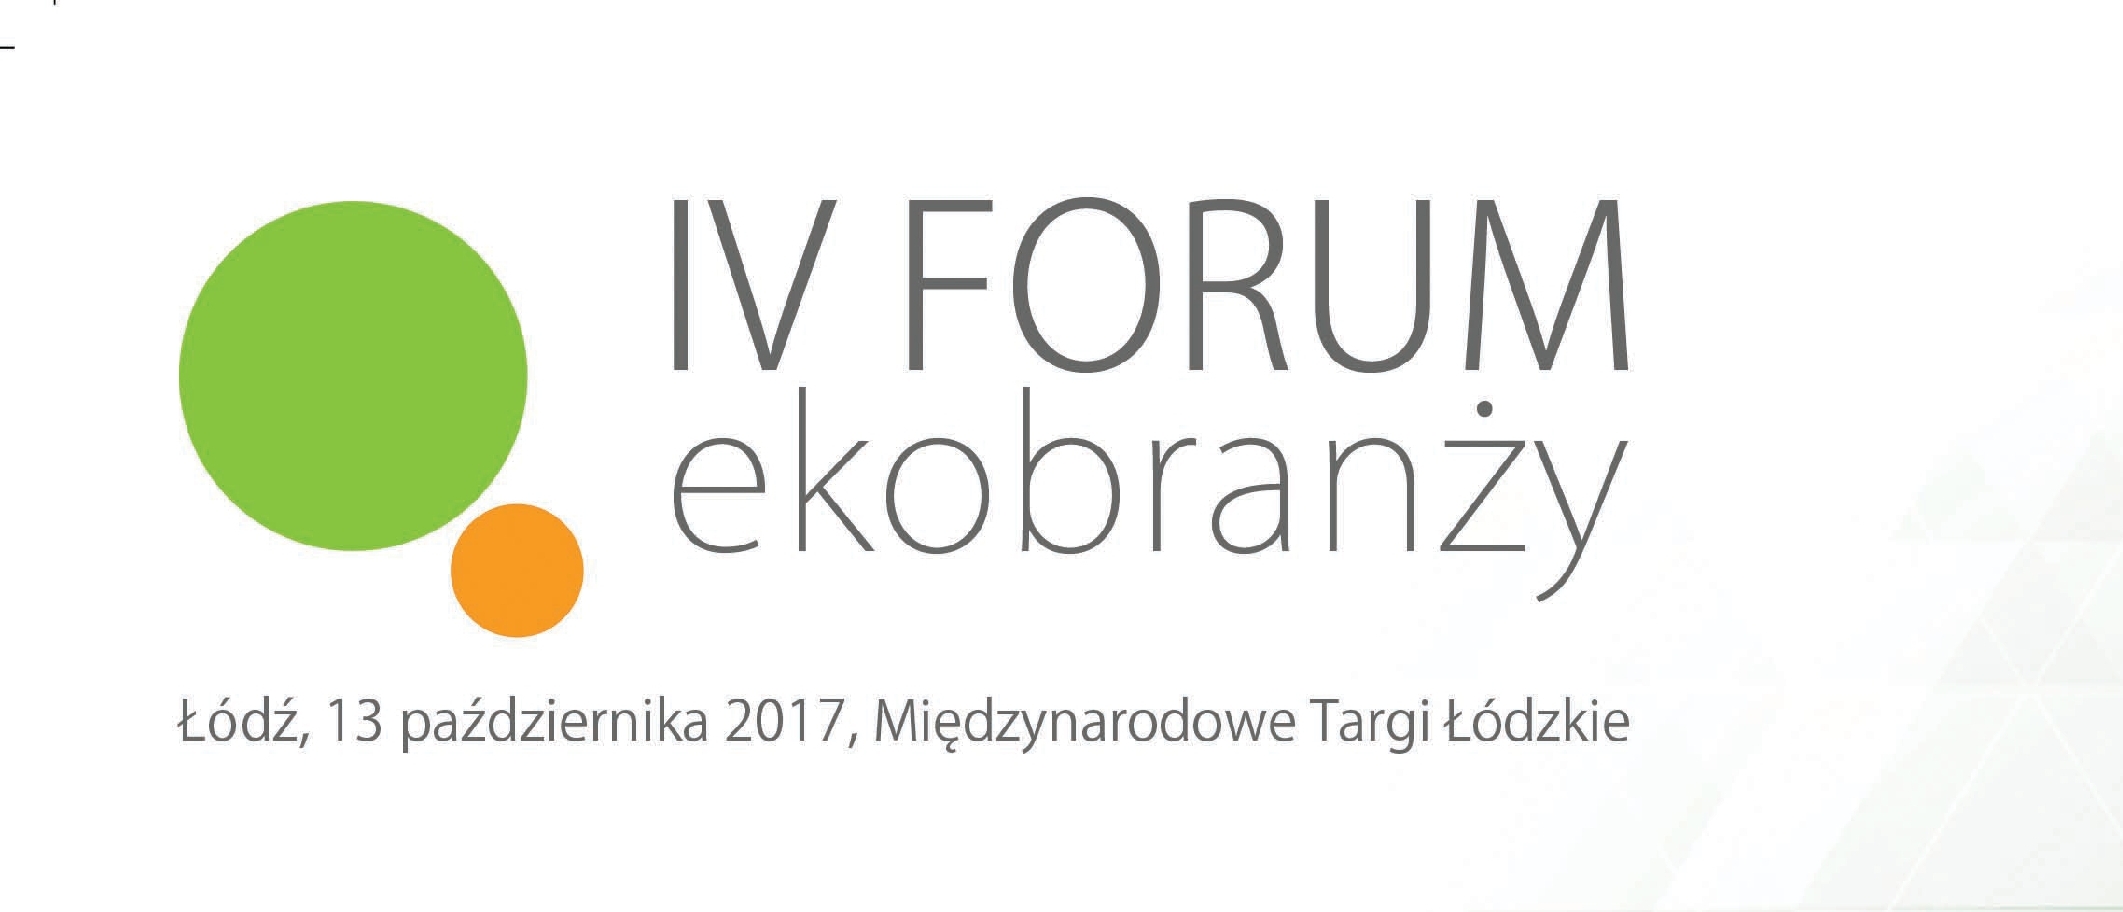 IV Forum